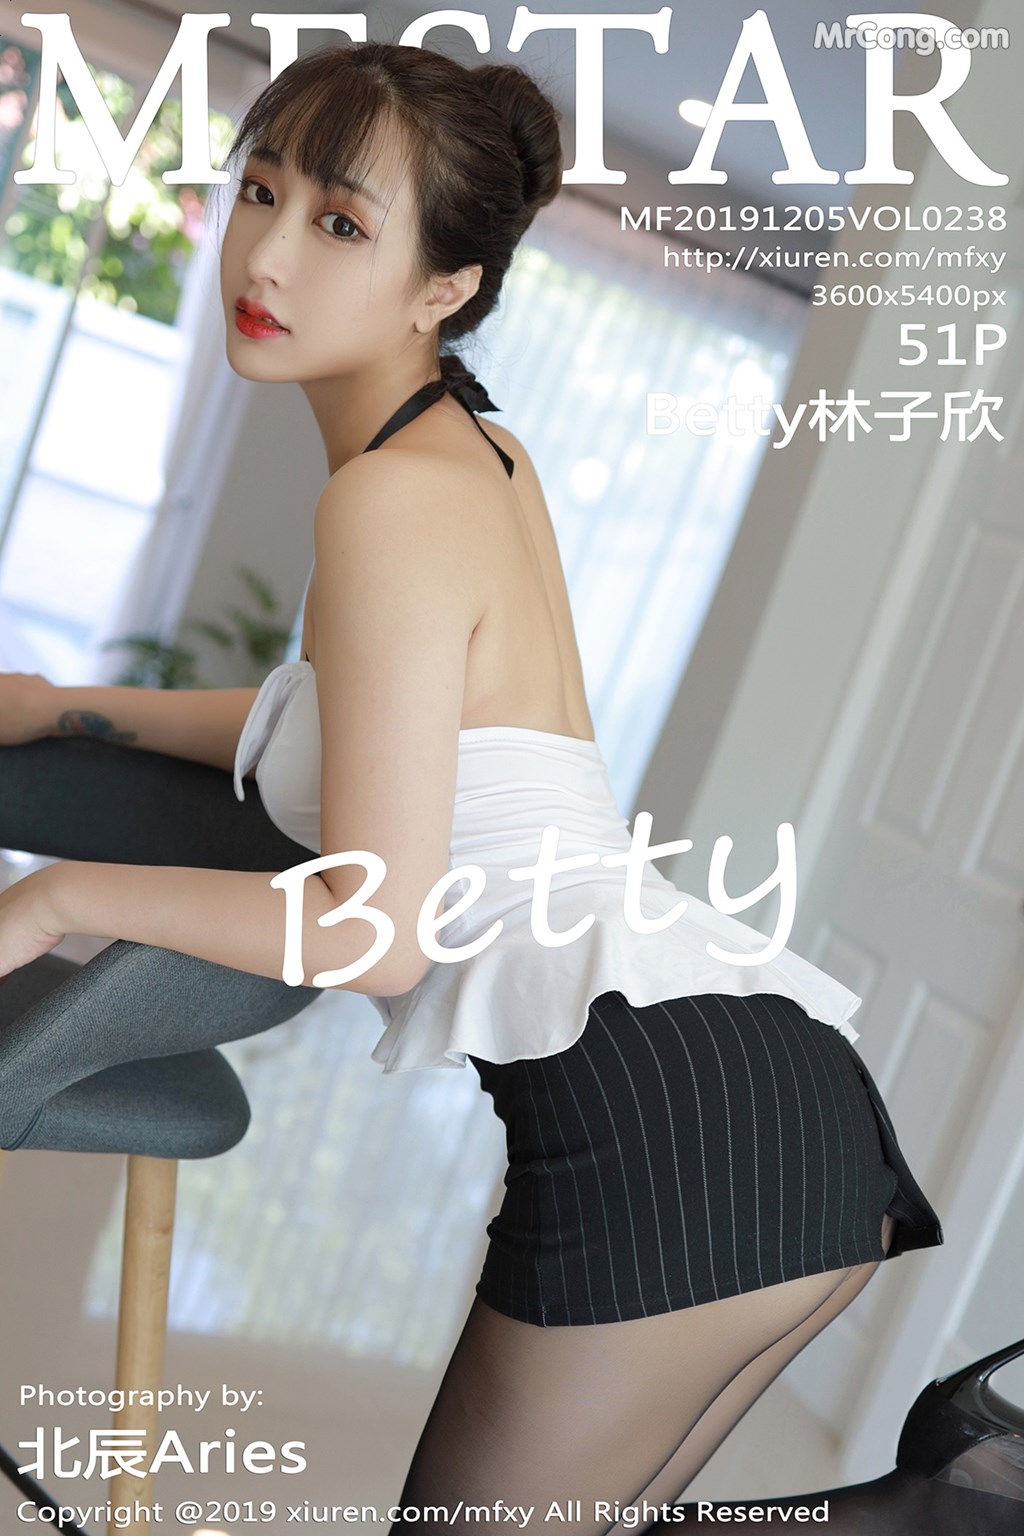 MFStar Vol. 238: Betty 林子欣 (52 photos)